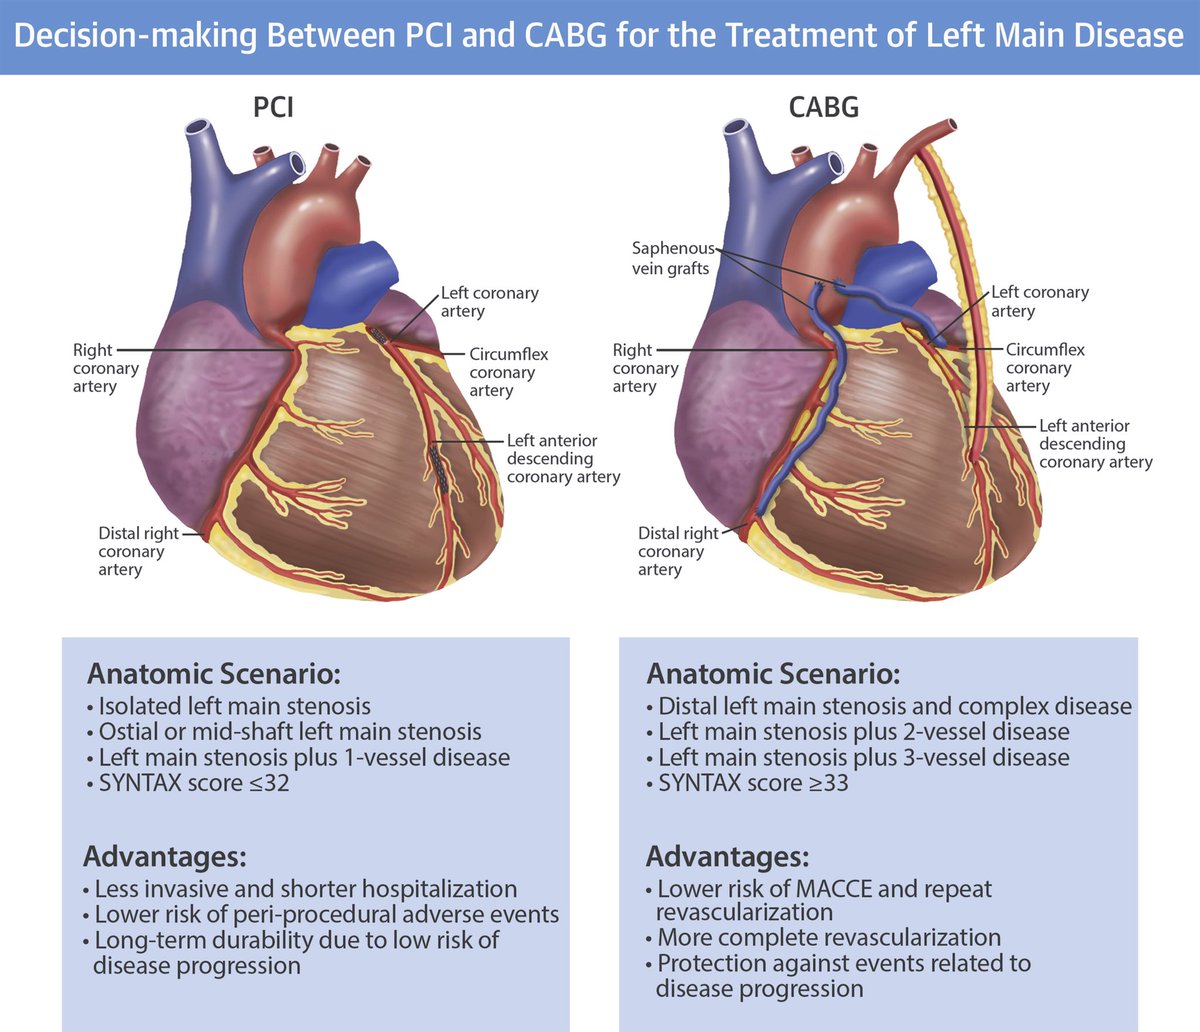 CABG vs PCI for left main coronary artery disease